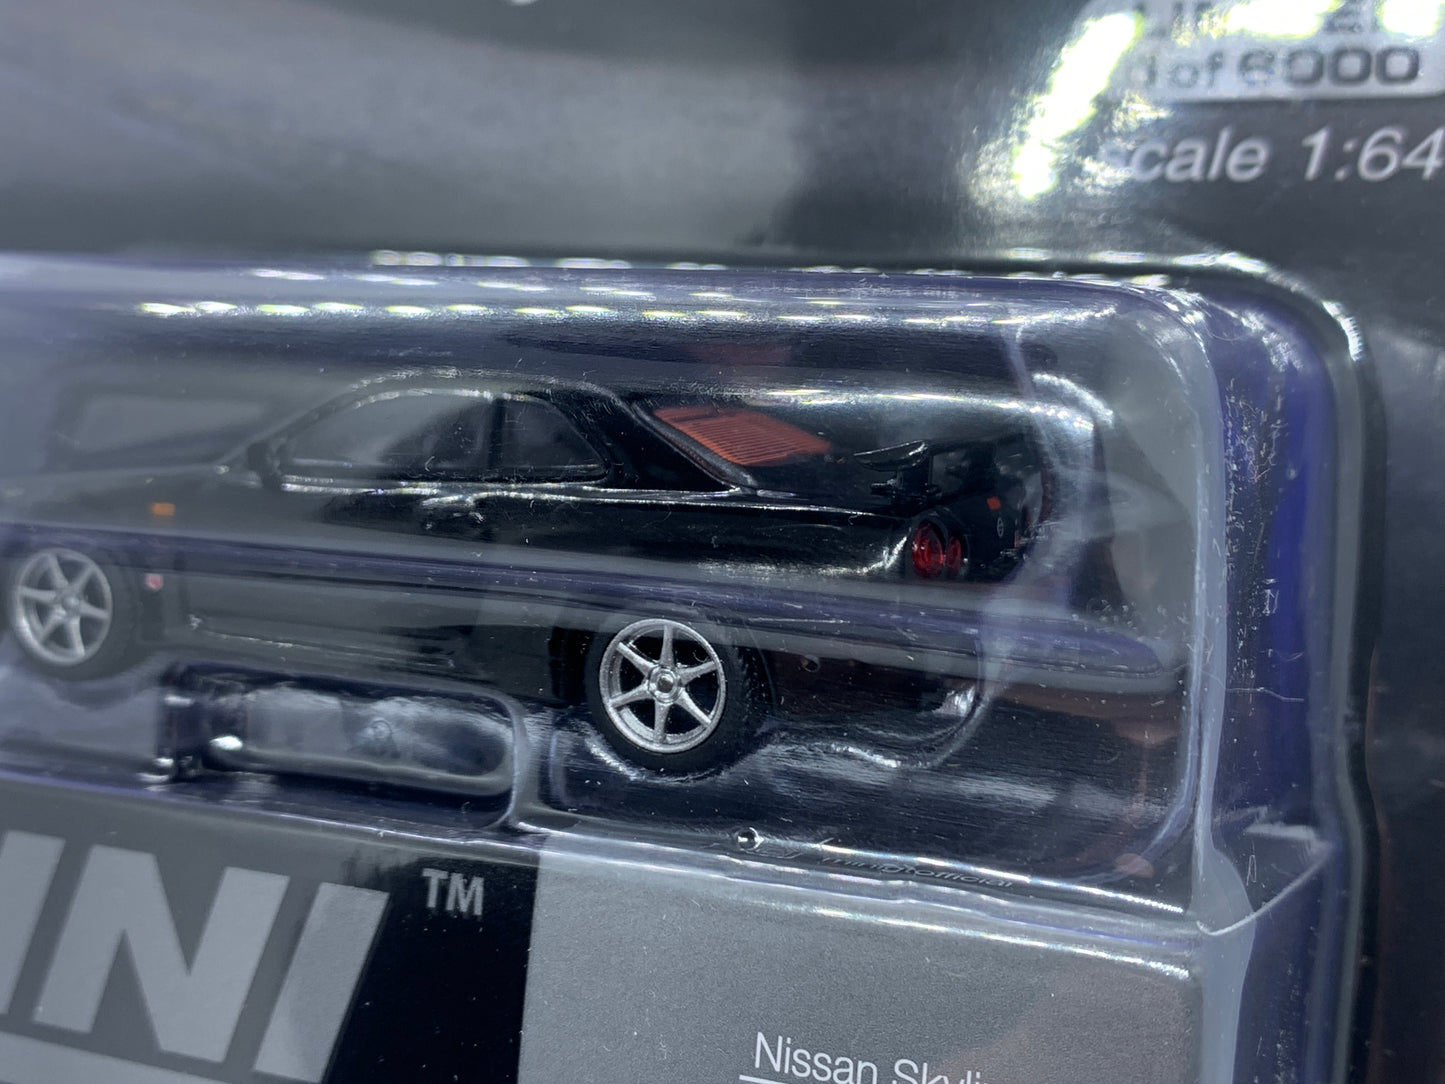 MINI GT - Nissan Skyline R34 GT-R Black Pearl - Display Blister Packaging